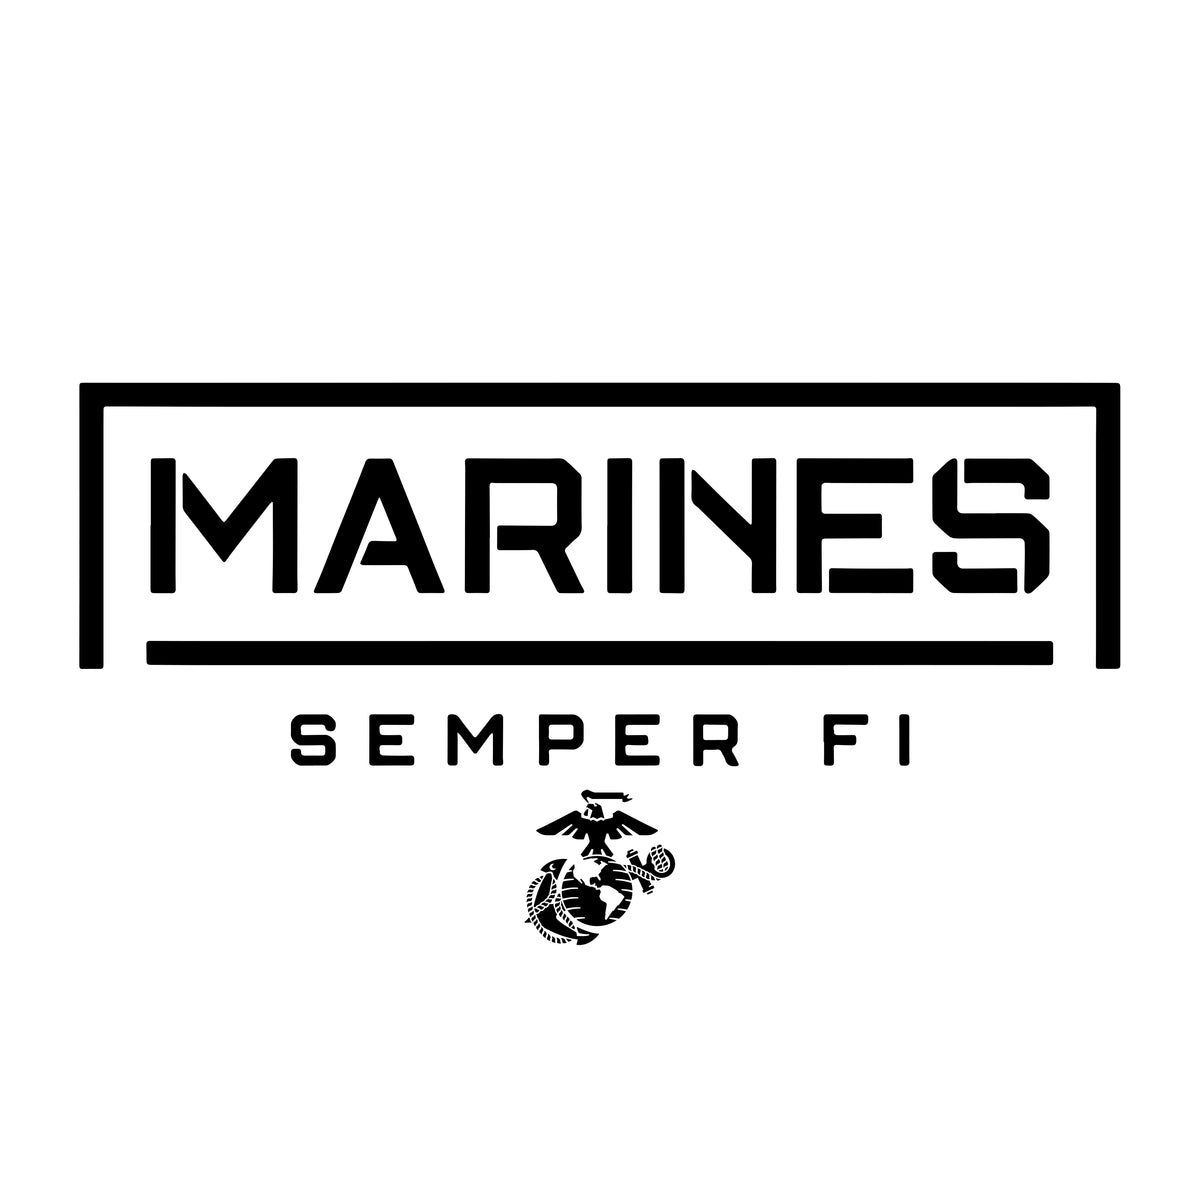 Marines "THE OUTPOST" Desert Sand Long Sleeve Tee